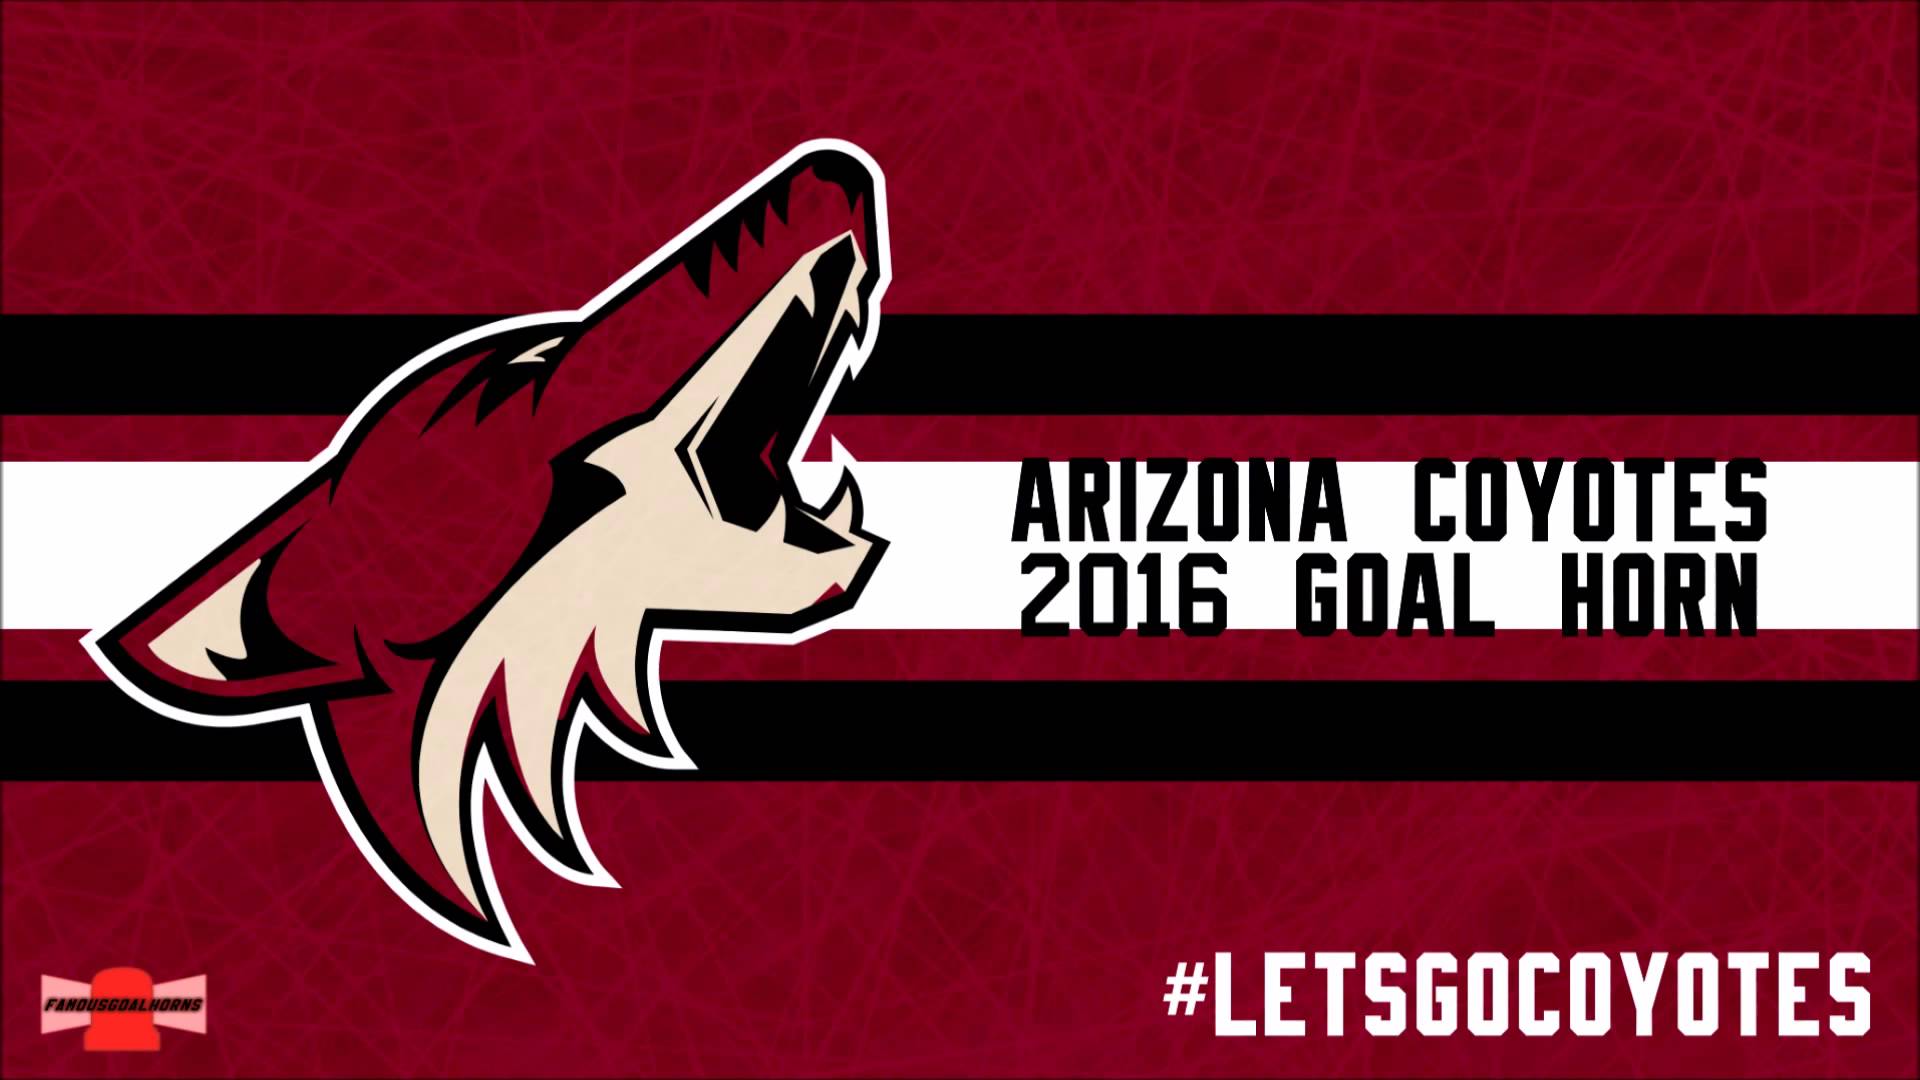 Arizona Coyotes 2016 Goal Horn